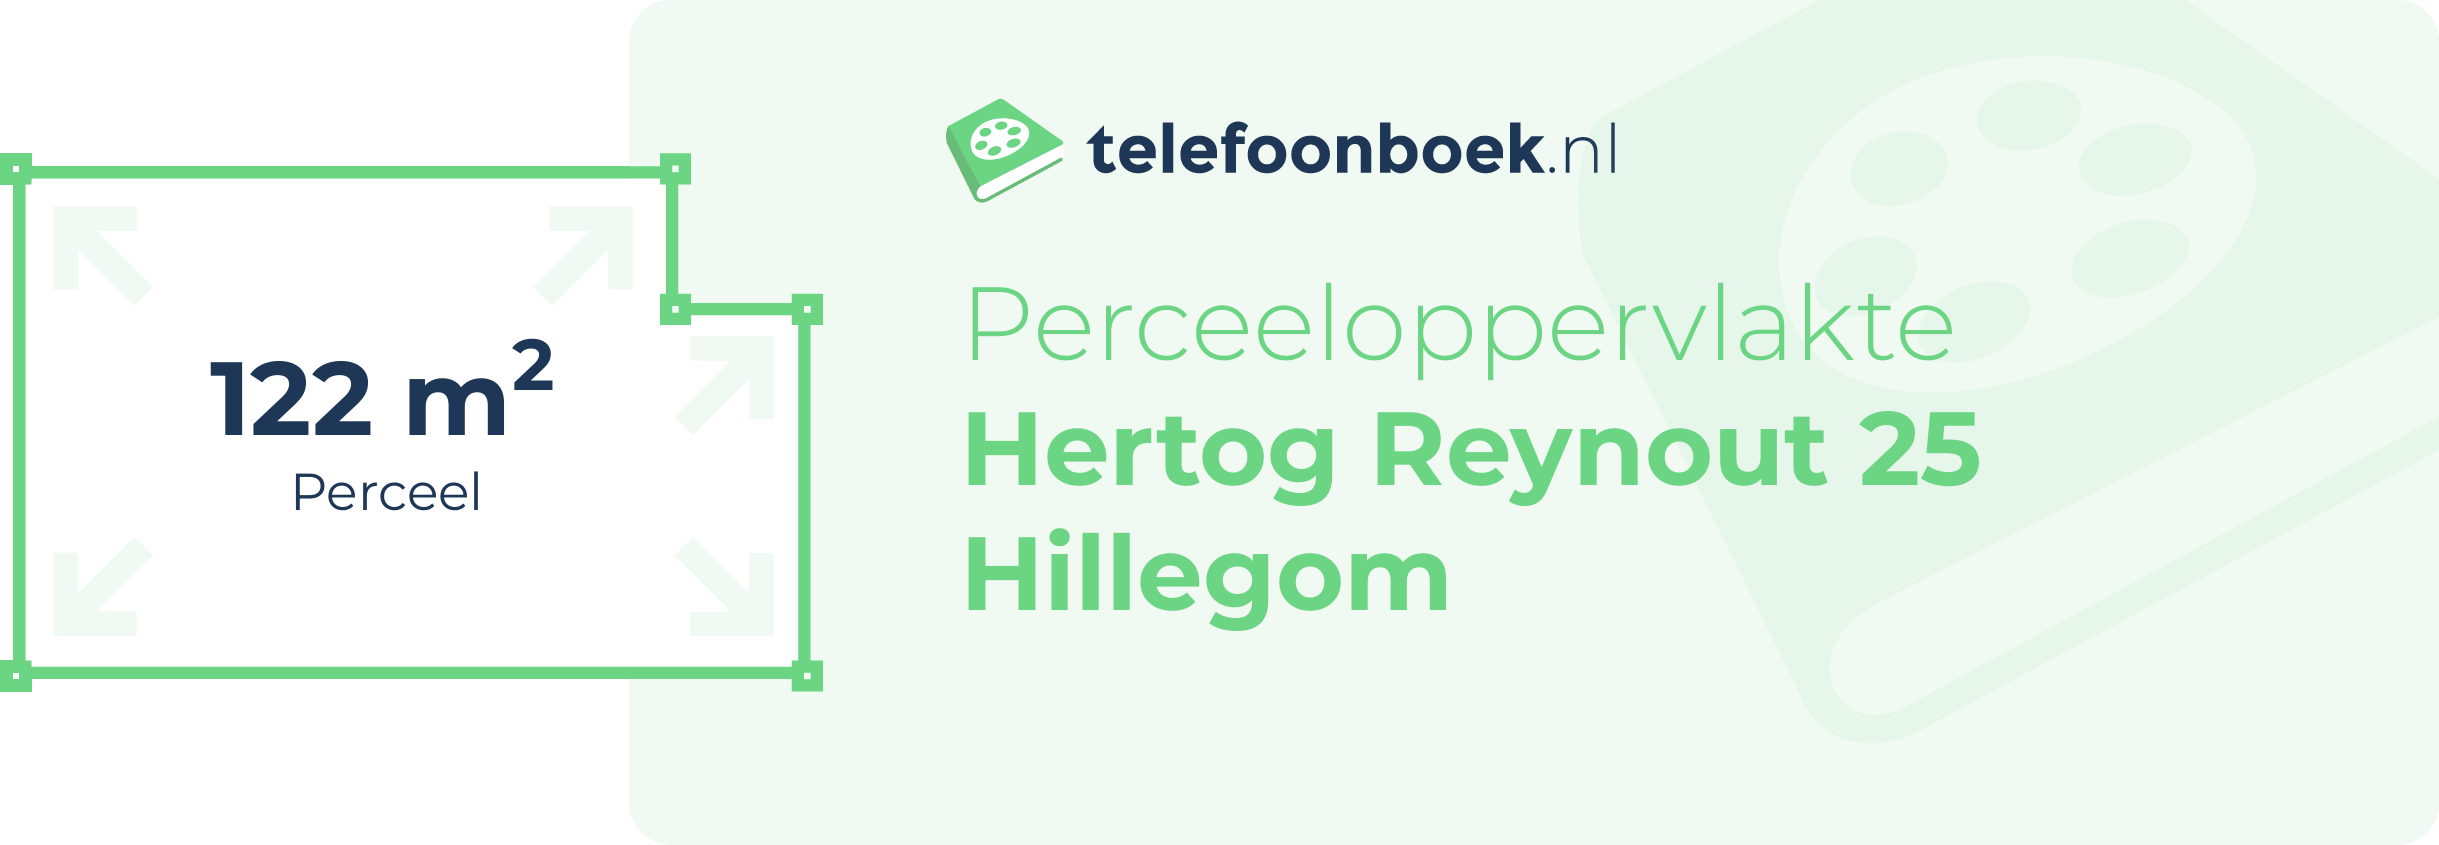 Perceeloppervlakte Hertog Reynout 25 Hillegom